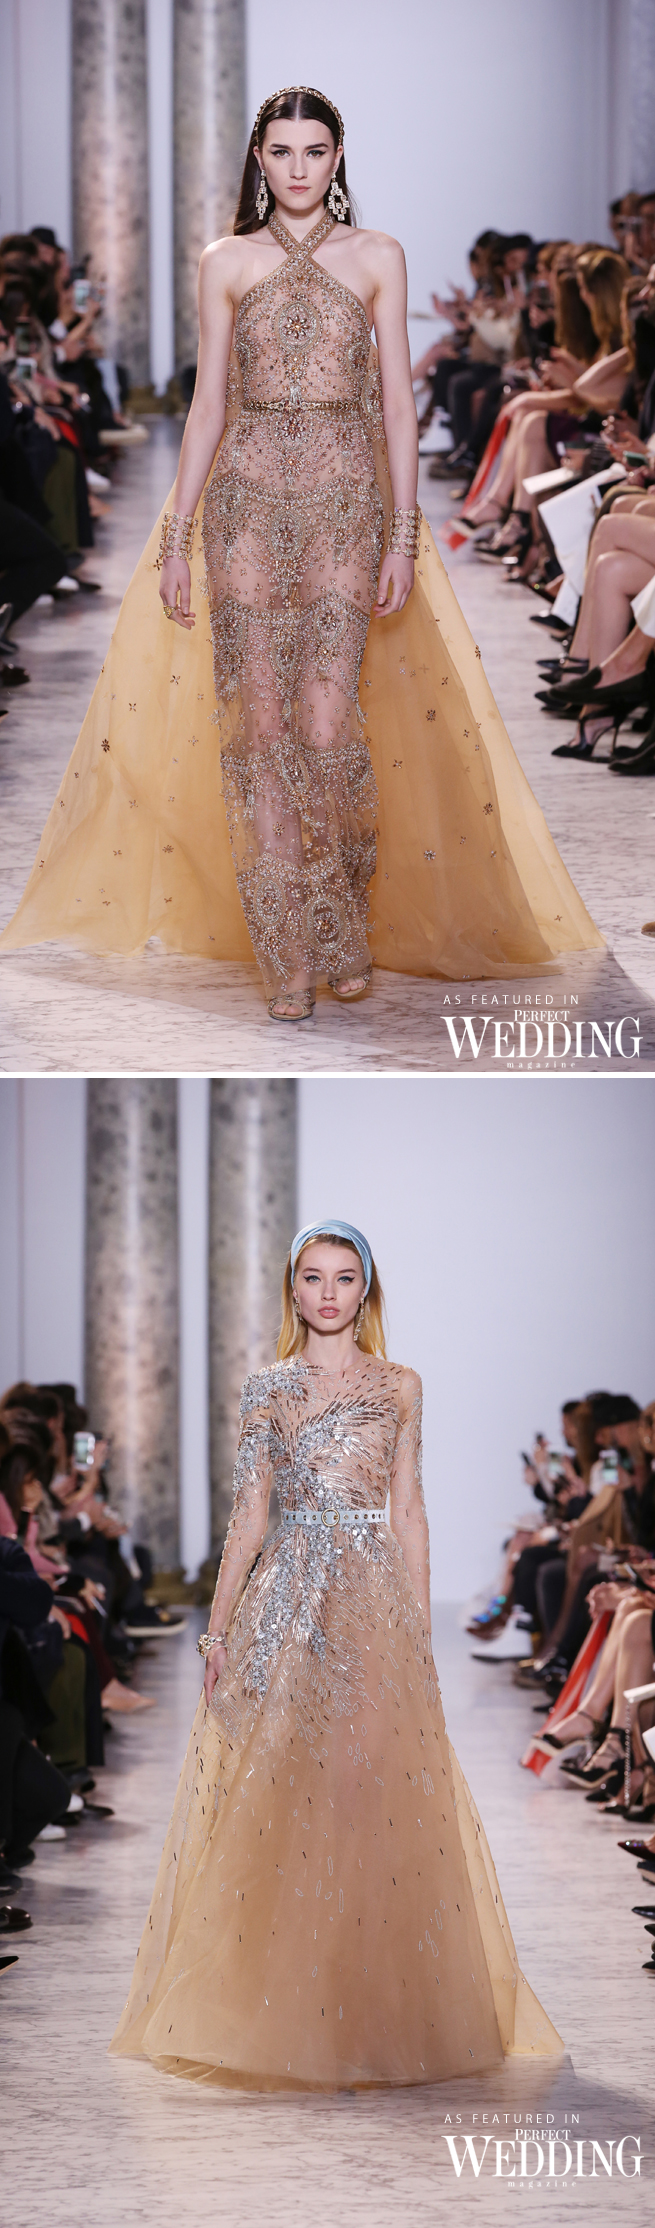 Elie Saab, Elie Saab Haute couture, The Birth Of Light, Elie Saab Spring Summer 2017, Perfect Wedding Magazine, Perfect Wedding Blog